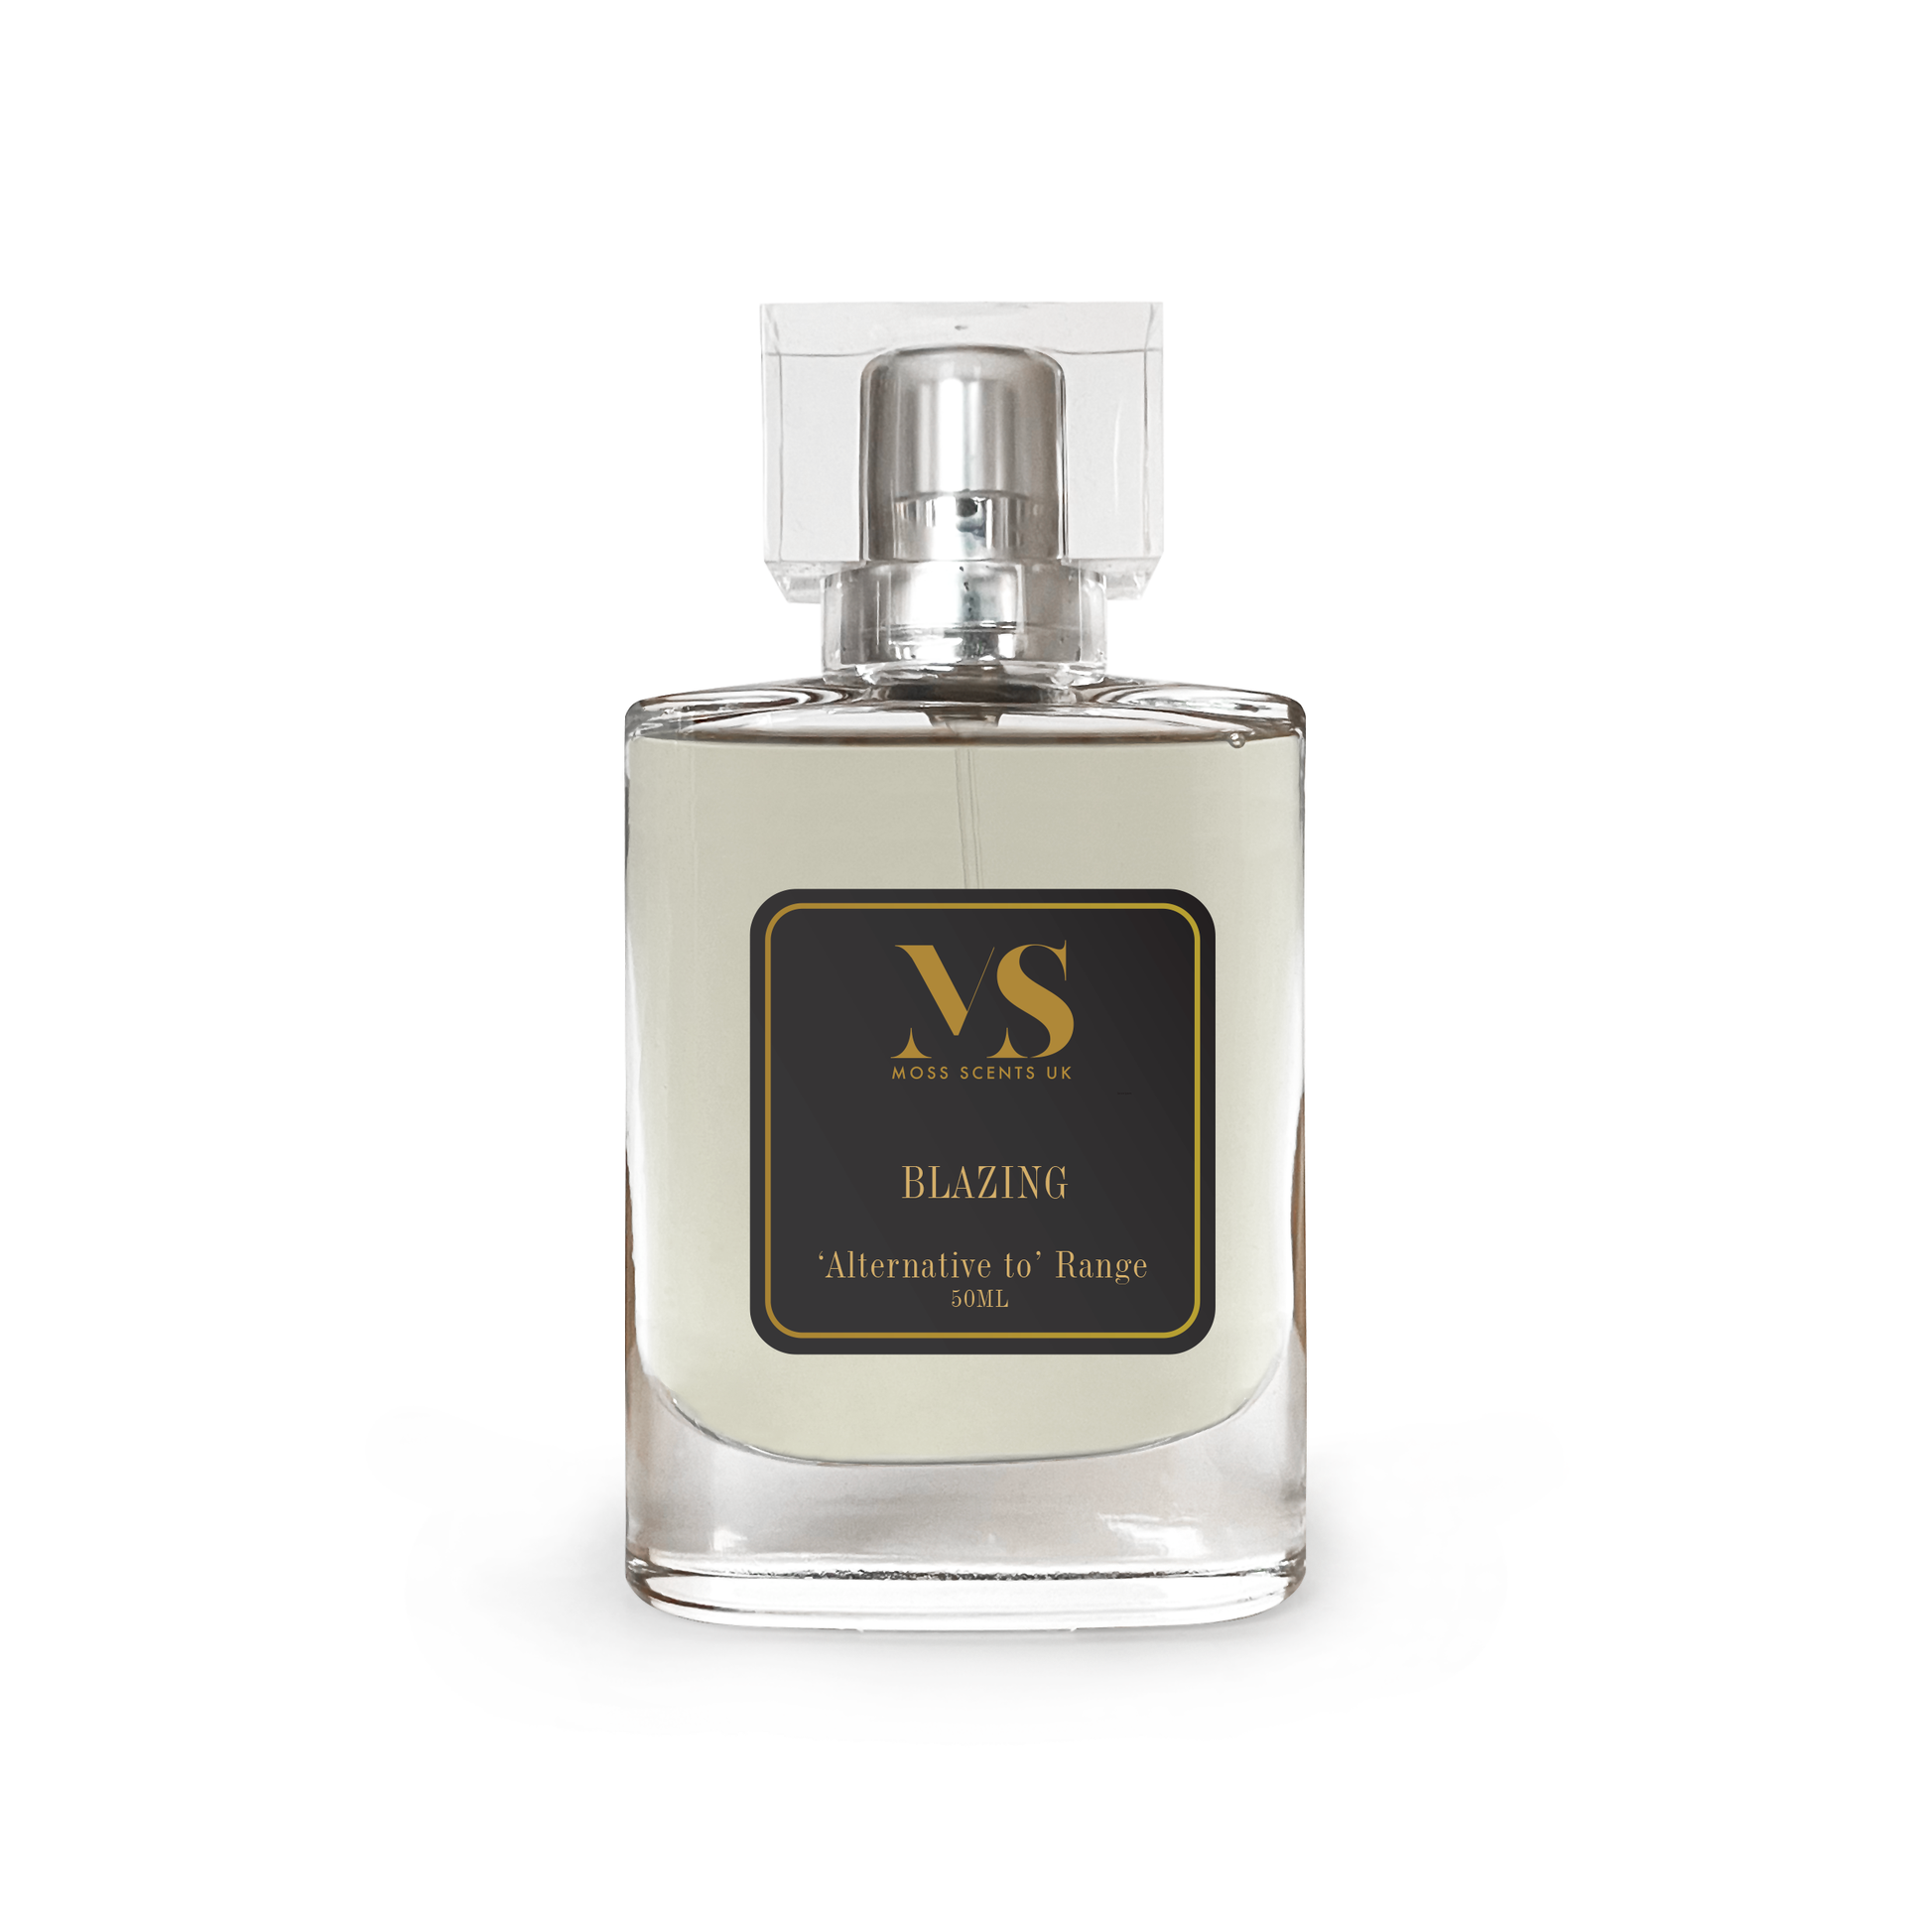 Blazing ‘Inspired by’ The Blazing Mister Sam fragrance for men | MossScentsUK